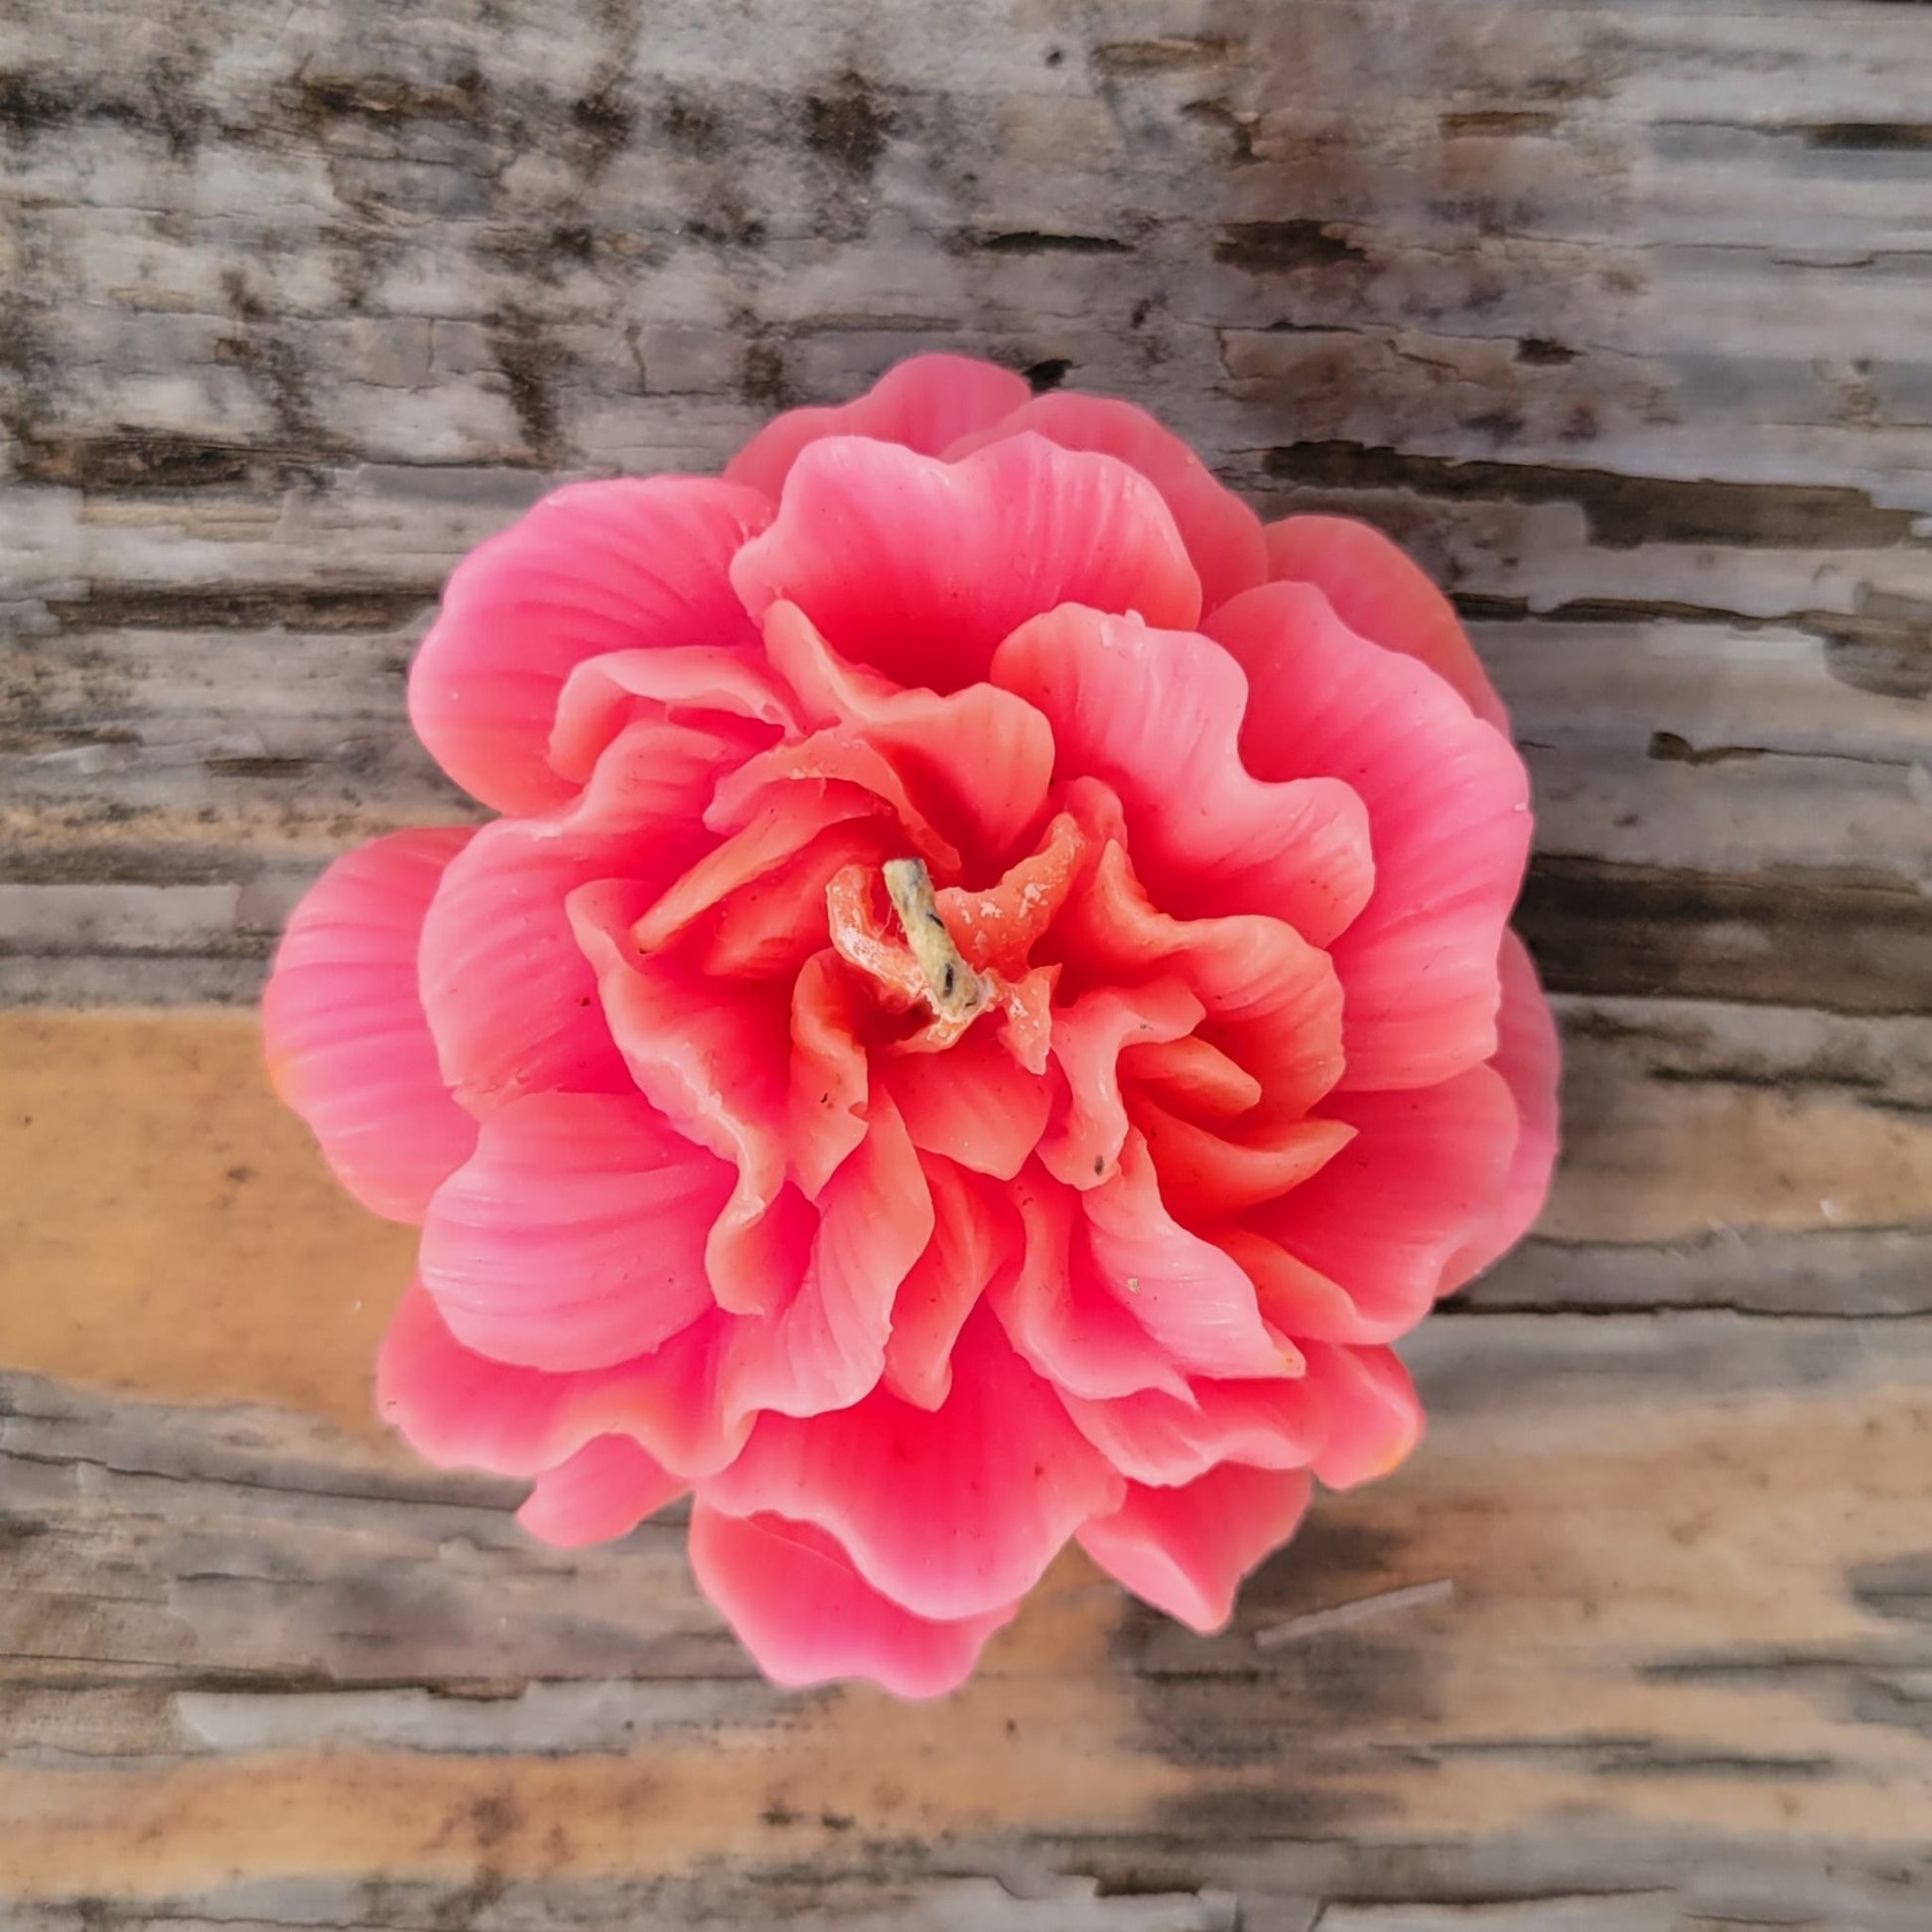 A handmade pink flower votive candle.